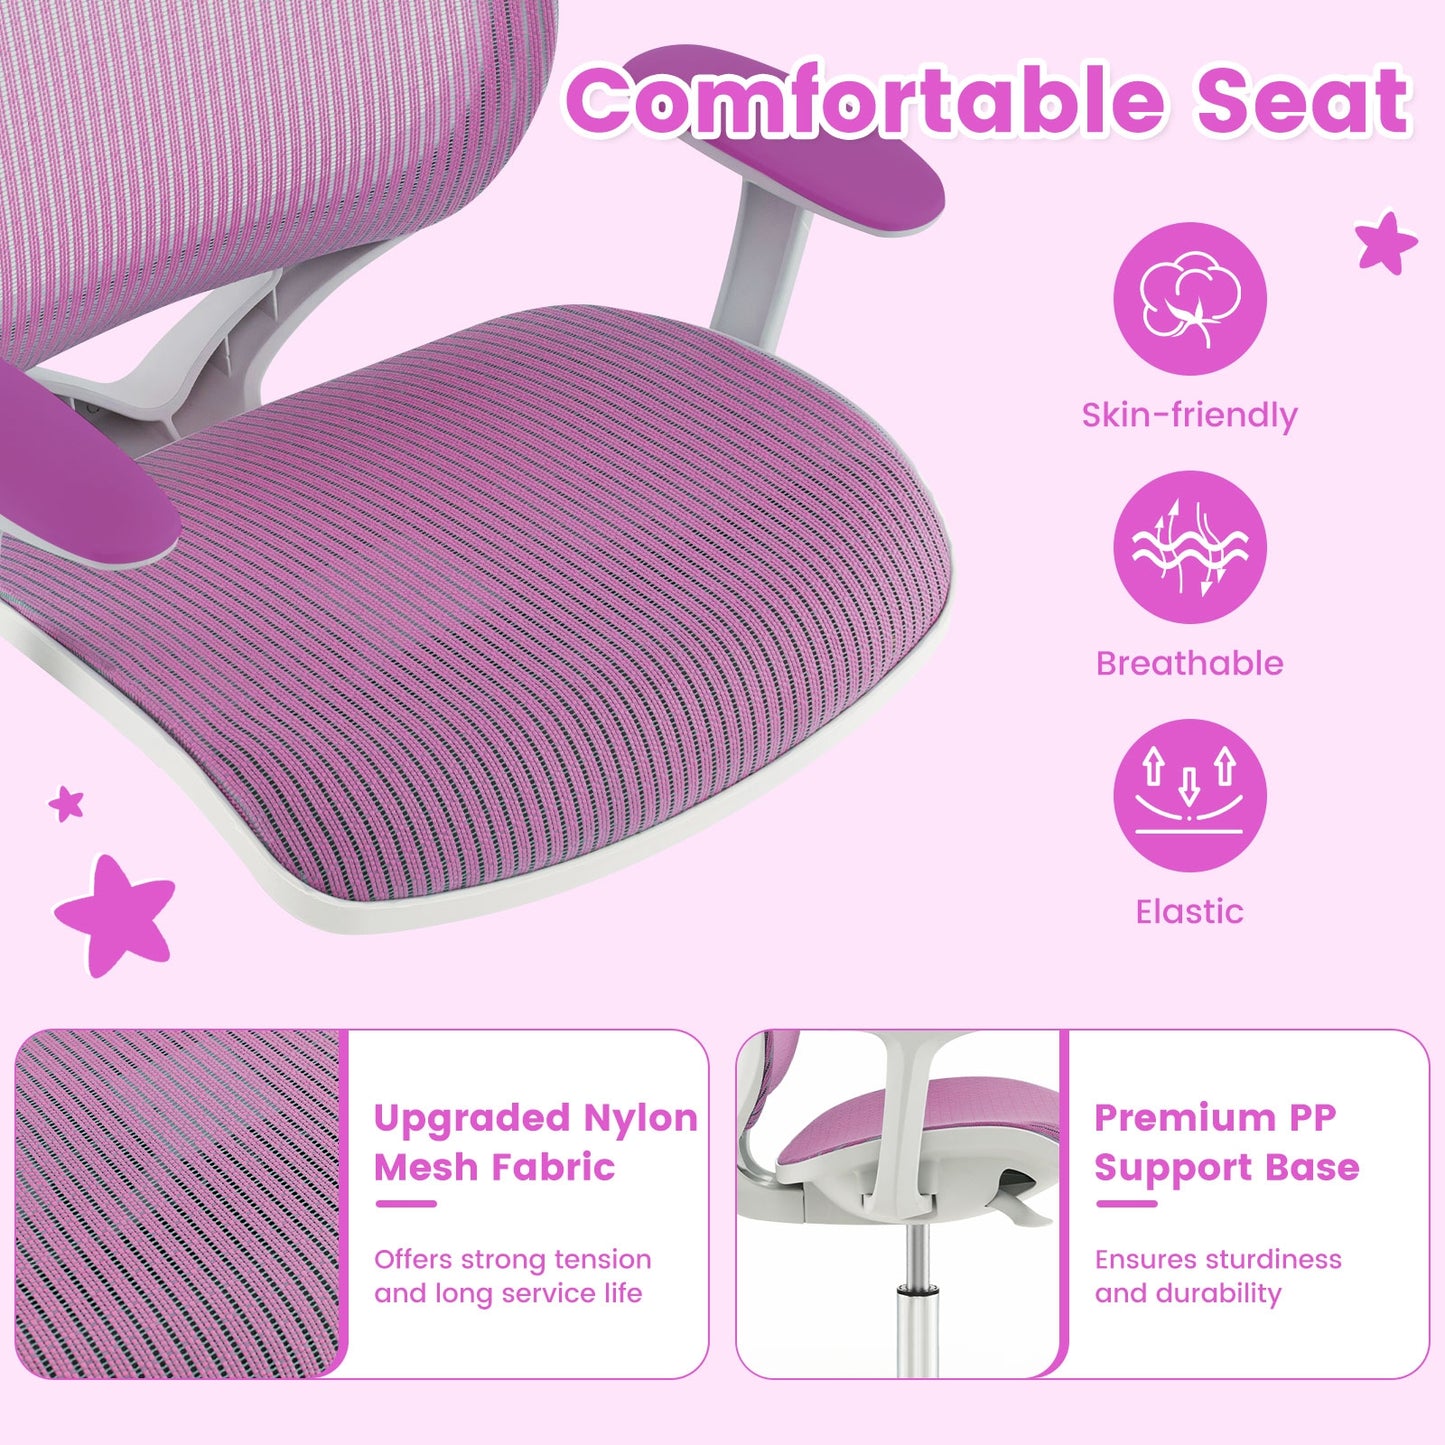 Swivel Mesh Children Computer Chair with Adjustable Height-Purple